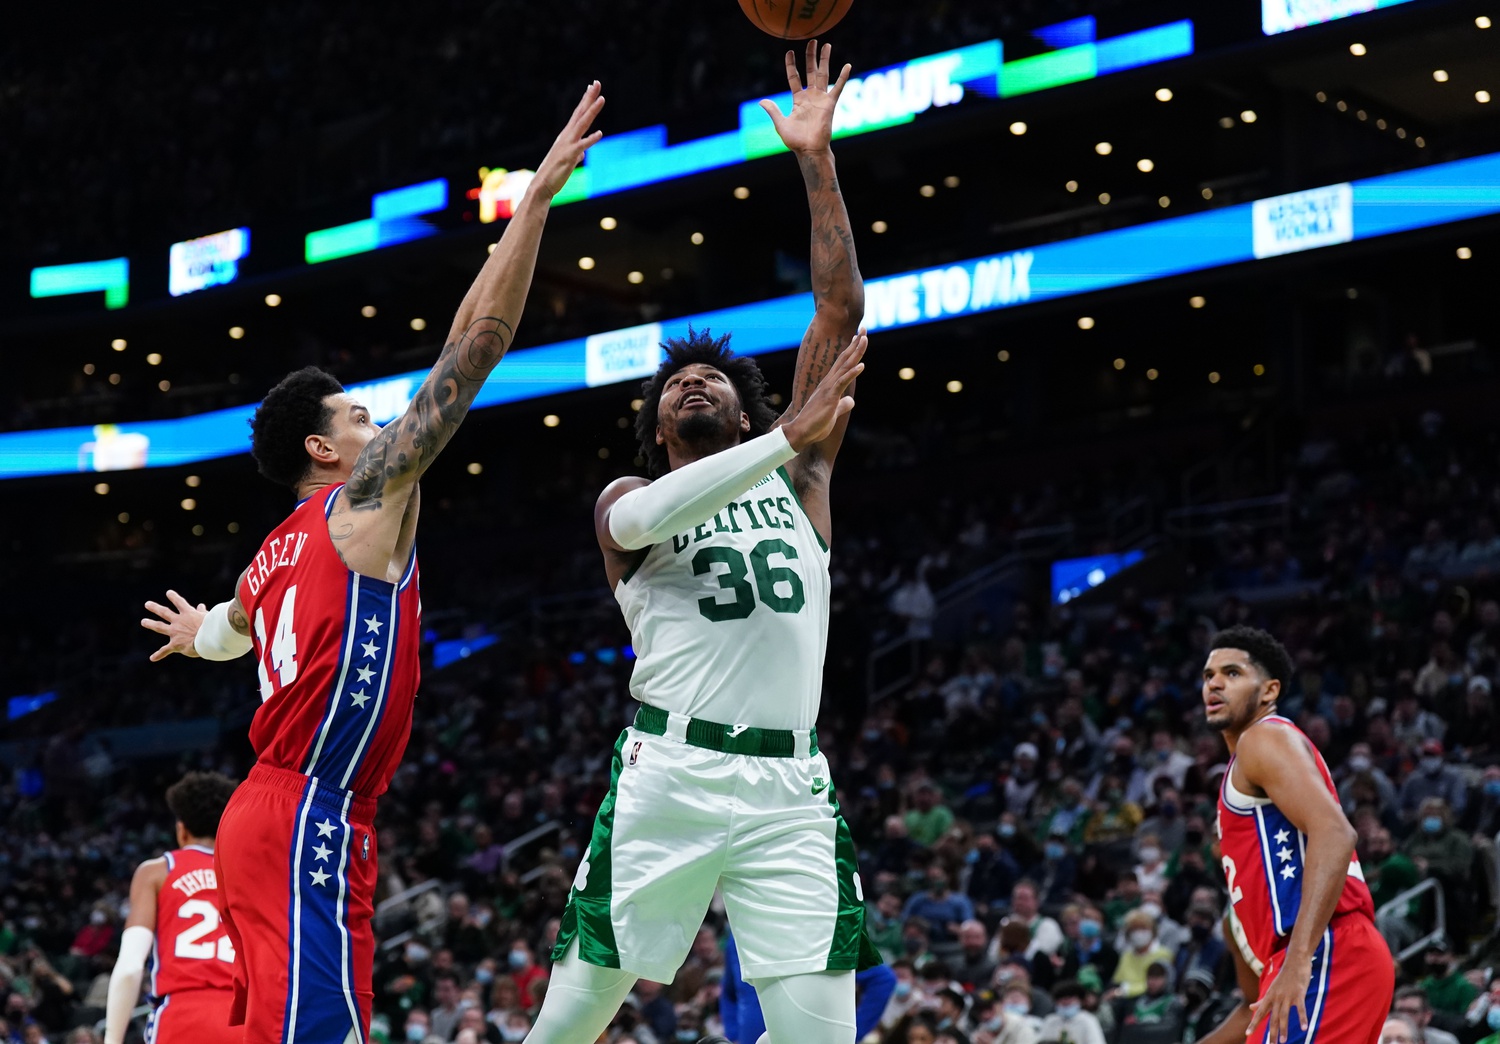 nba picks Marcus Smart Boston Celtics predictions best bet odds